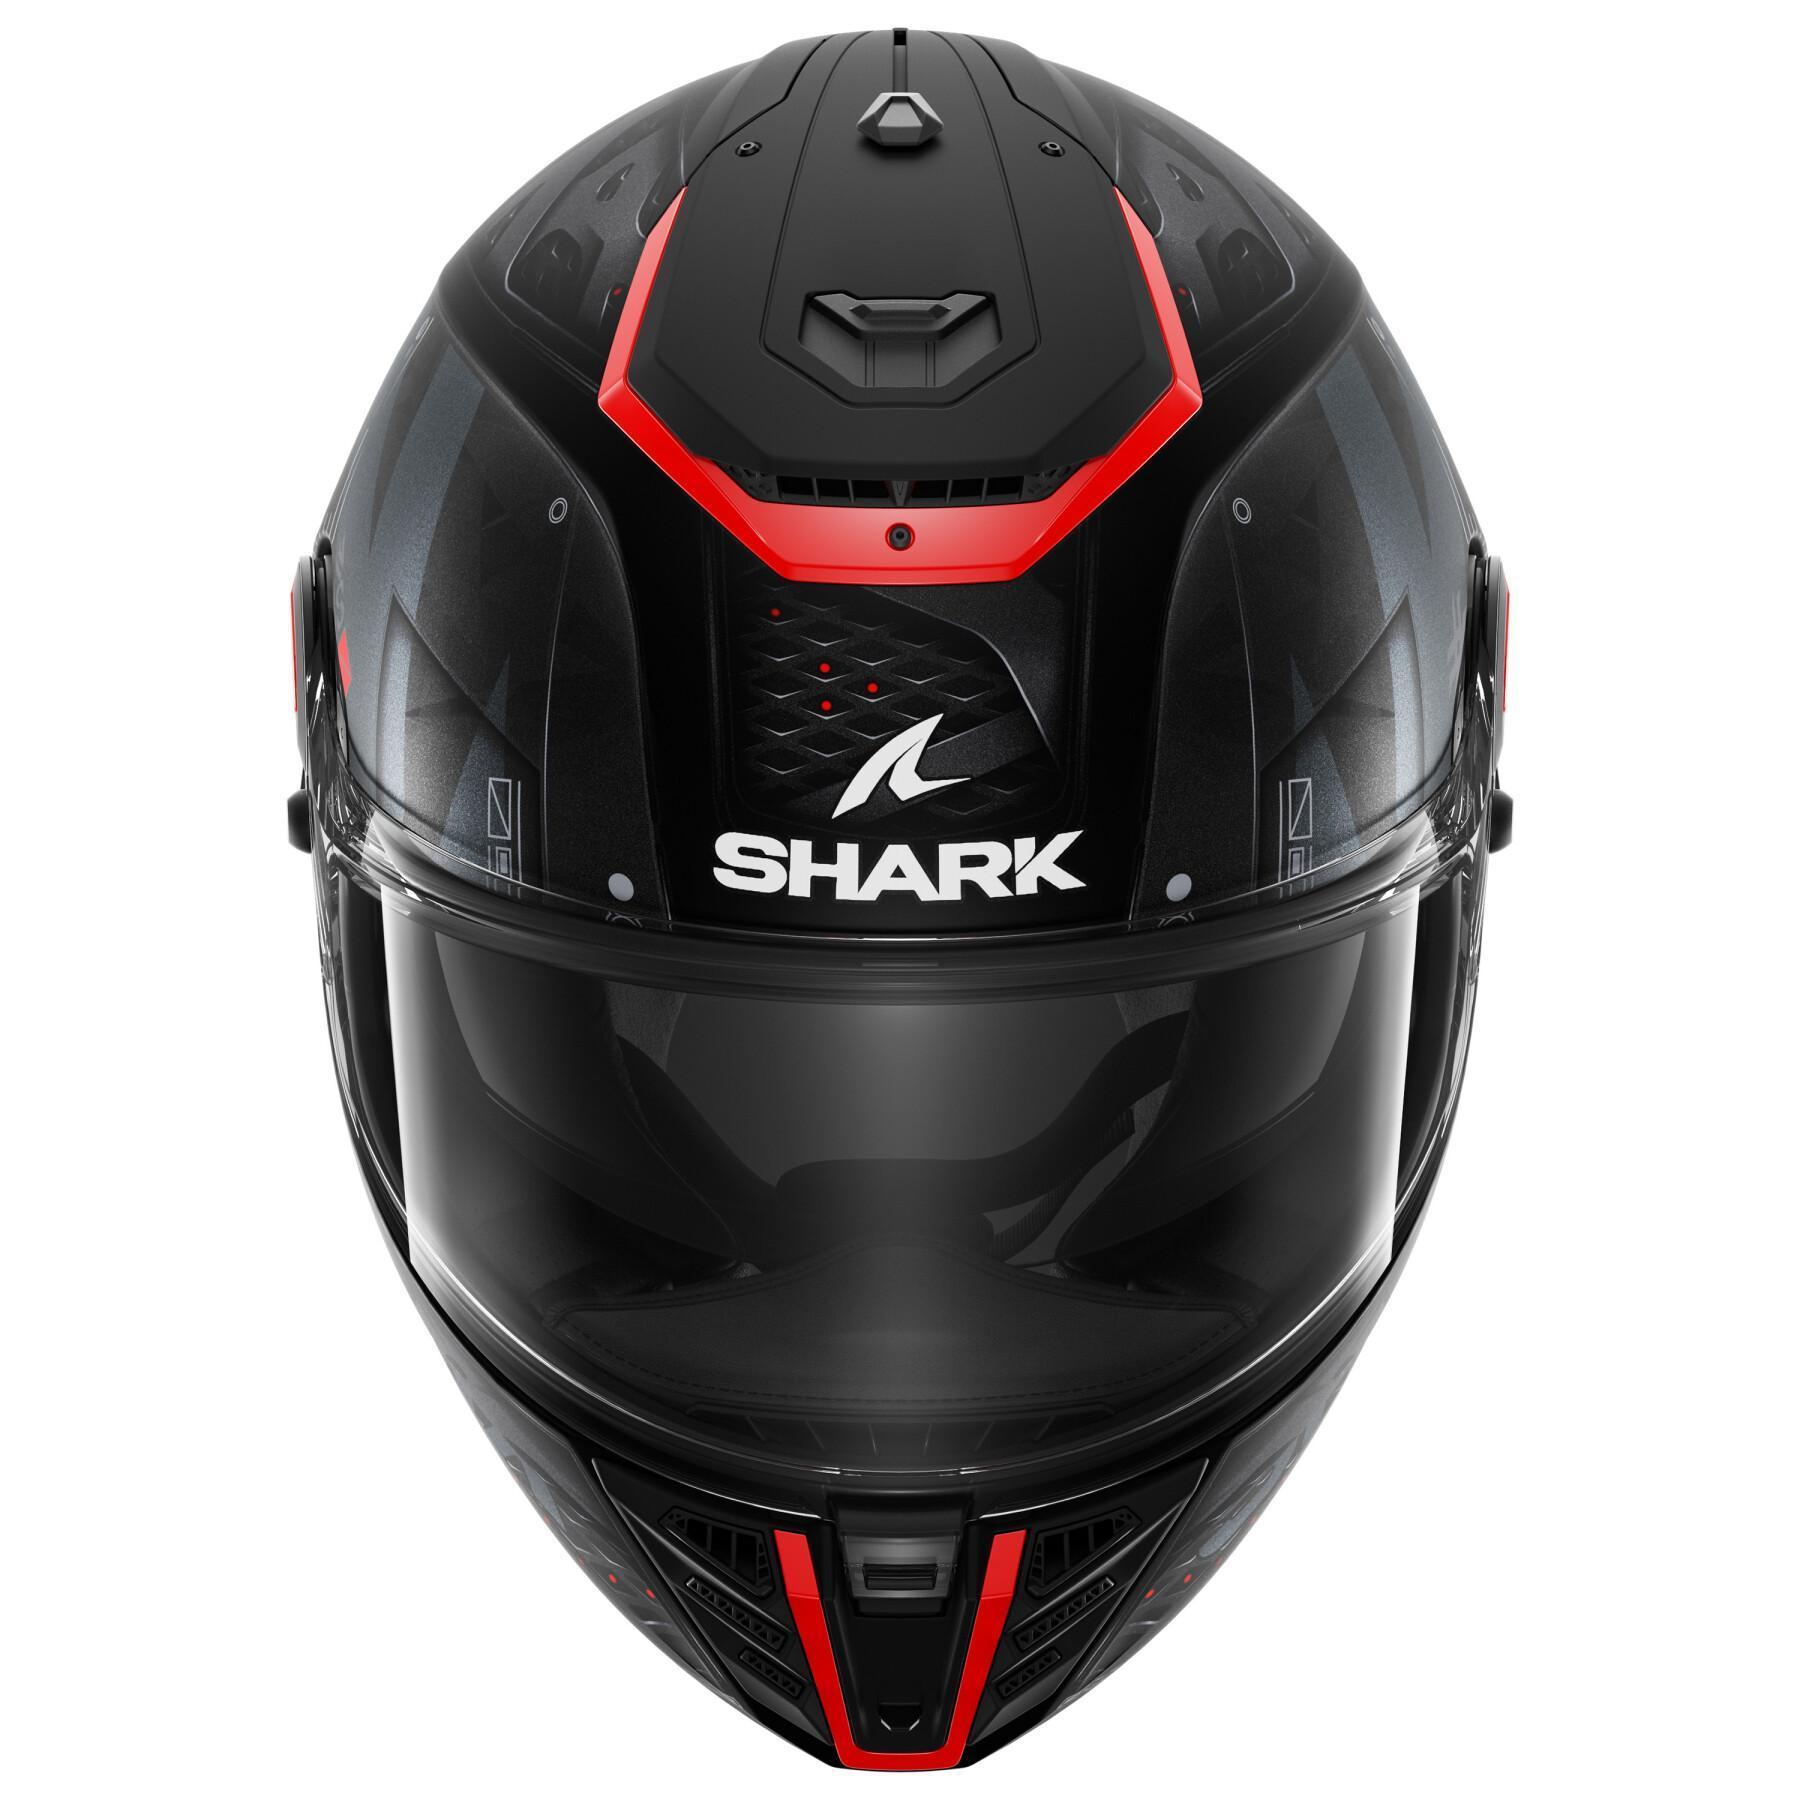 Casque moto intégral Shark Spartan Rs Stingrey